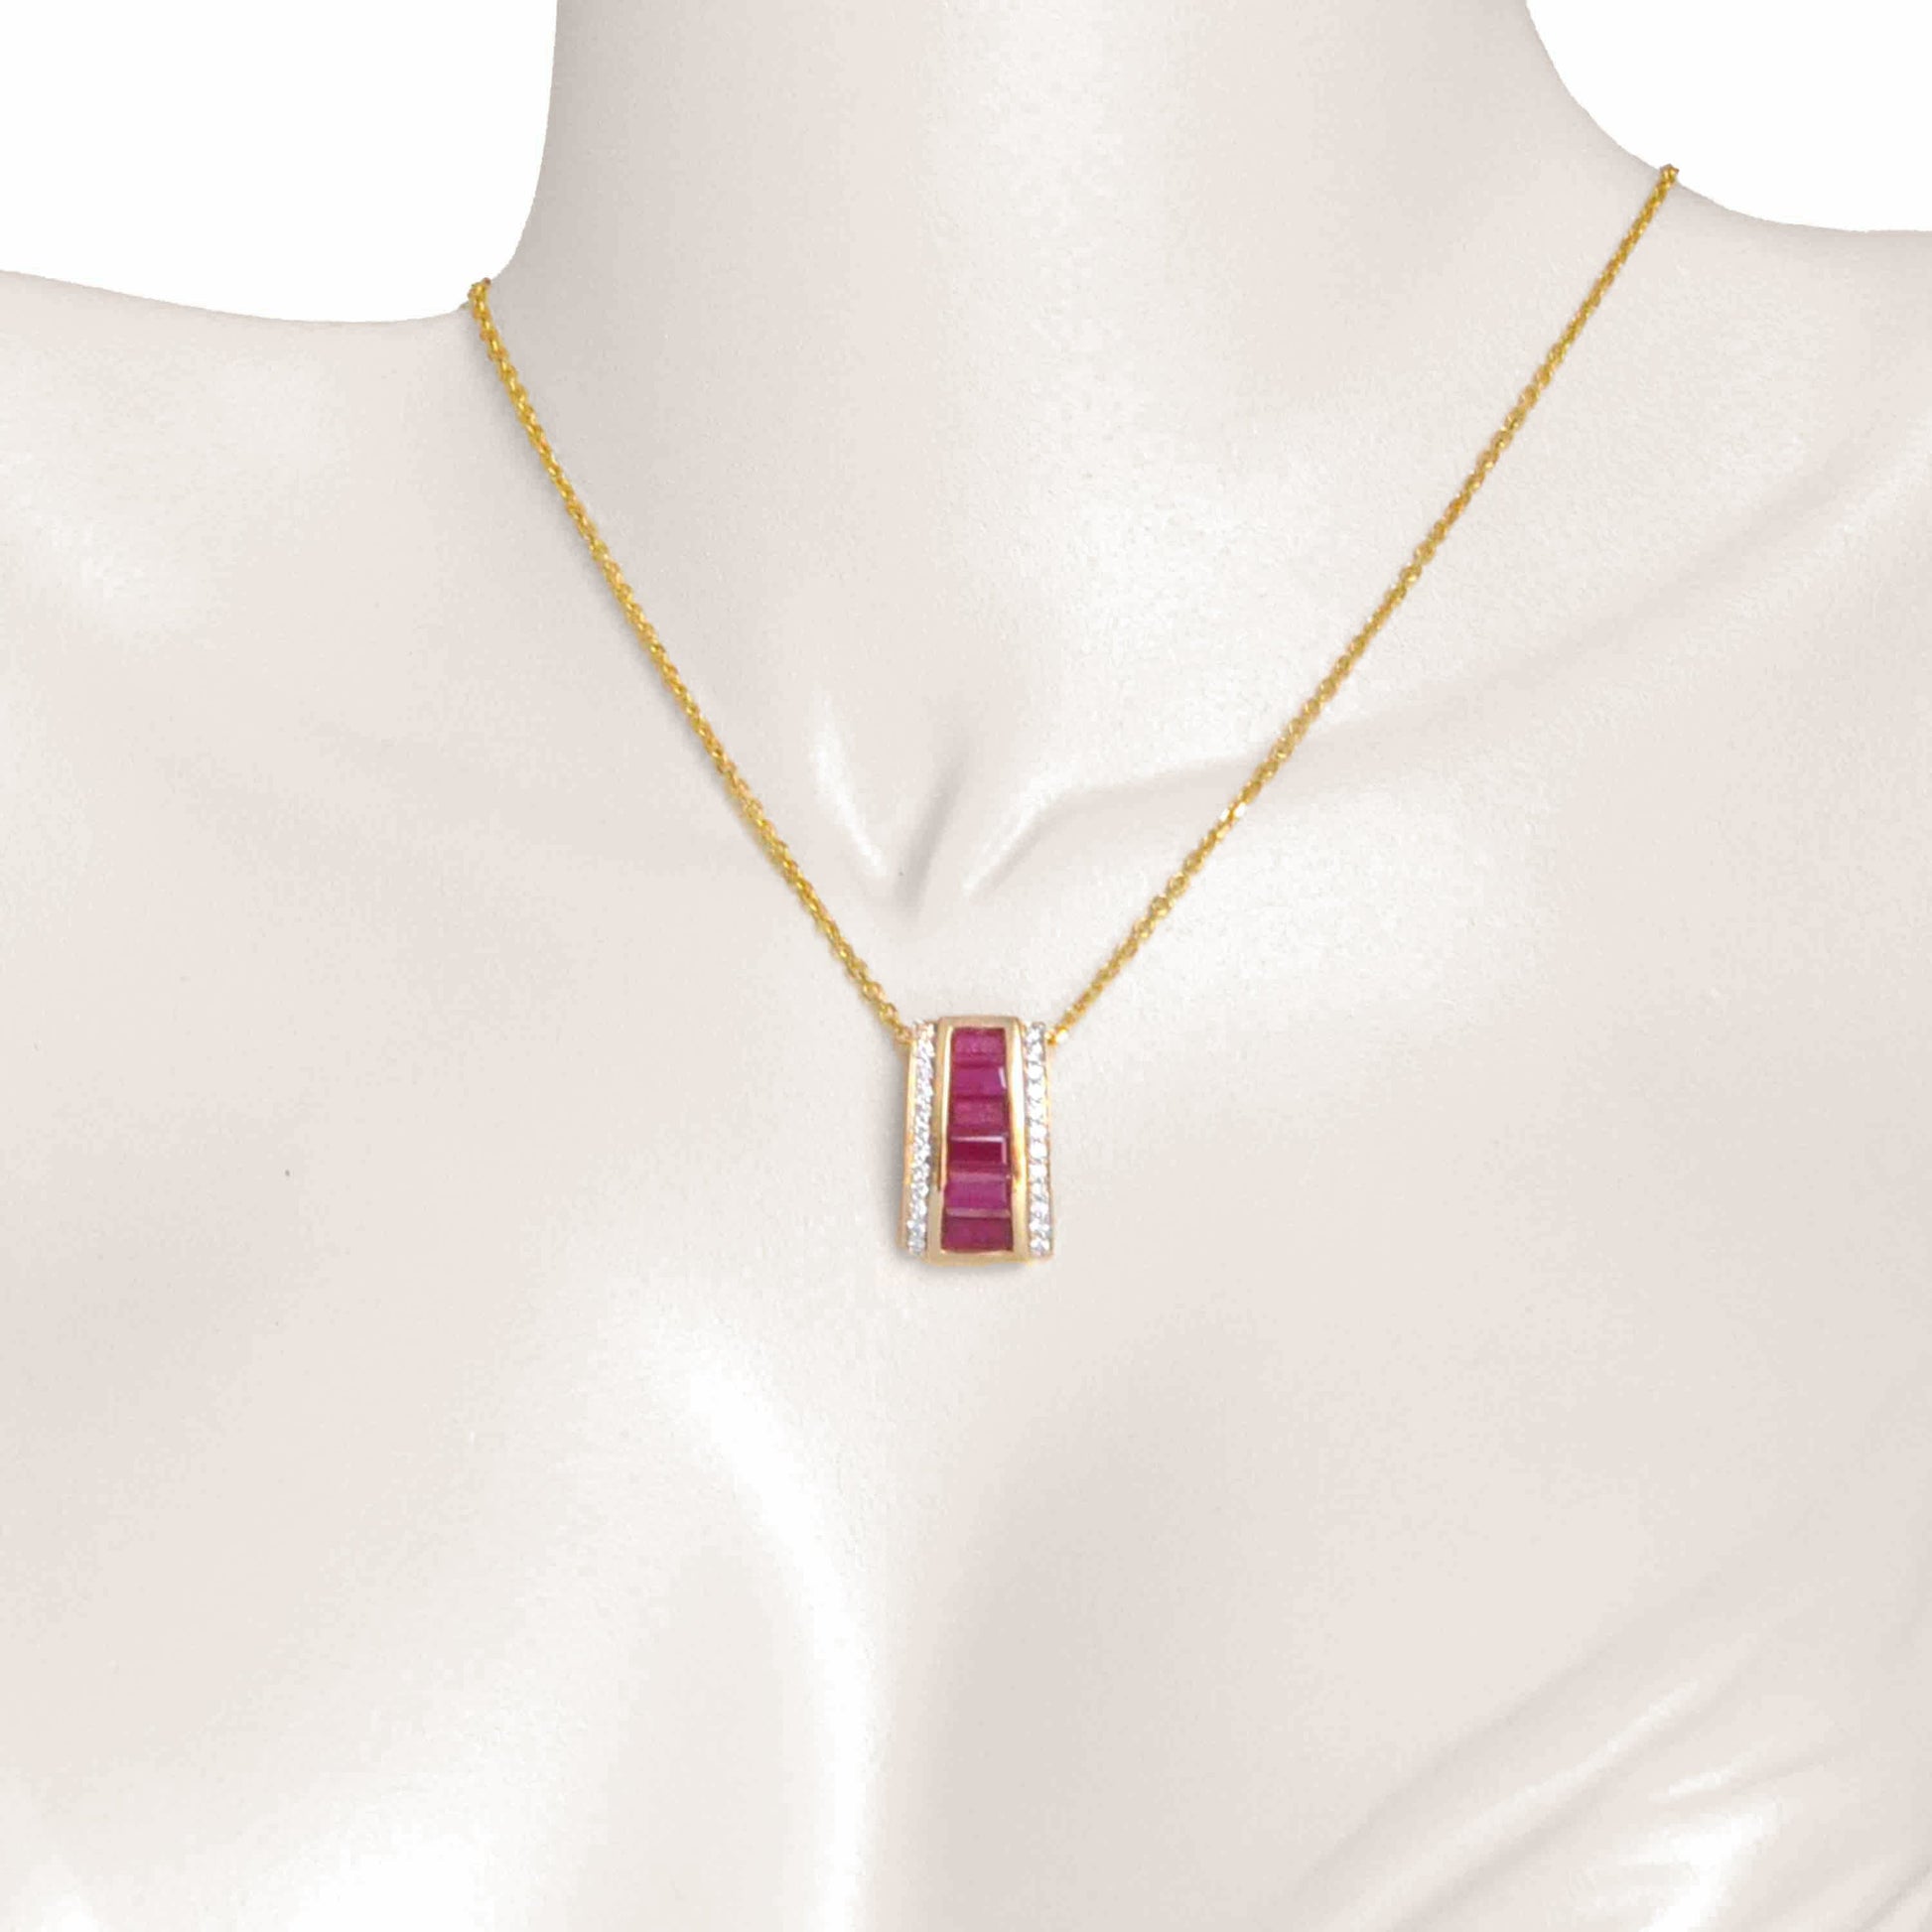 18K Gold Ruby Art Deco Pyramid Diamond Set - Vaibhav Dhadda Jewelry